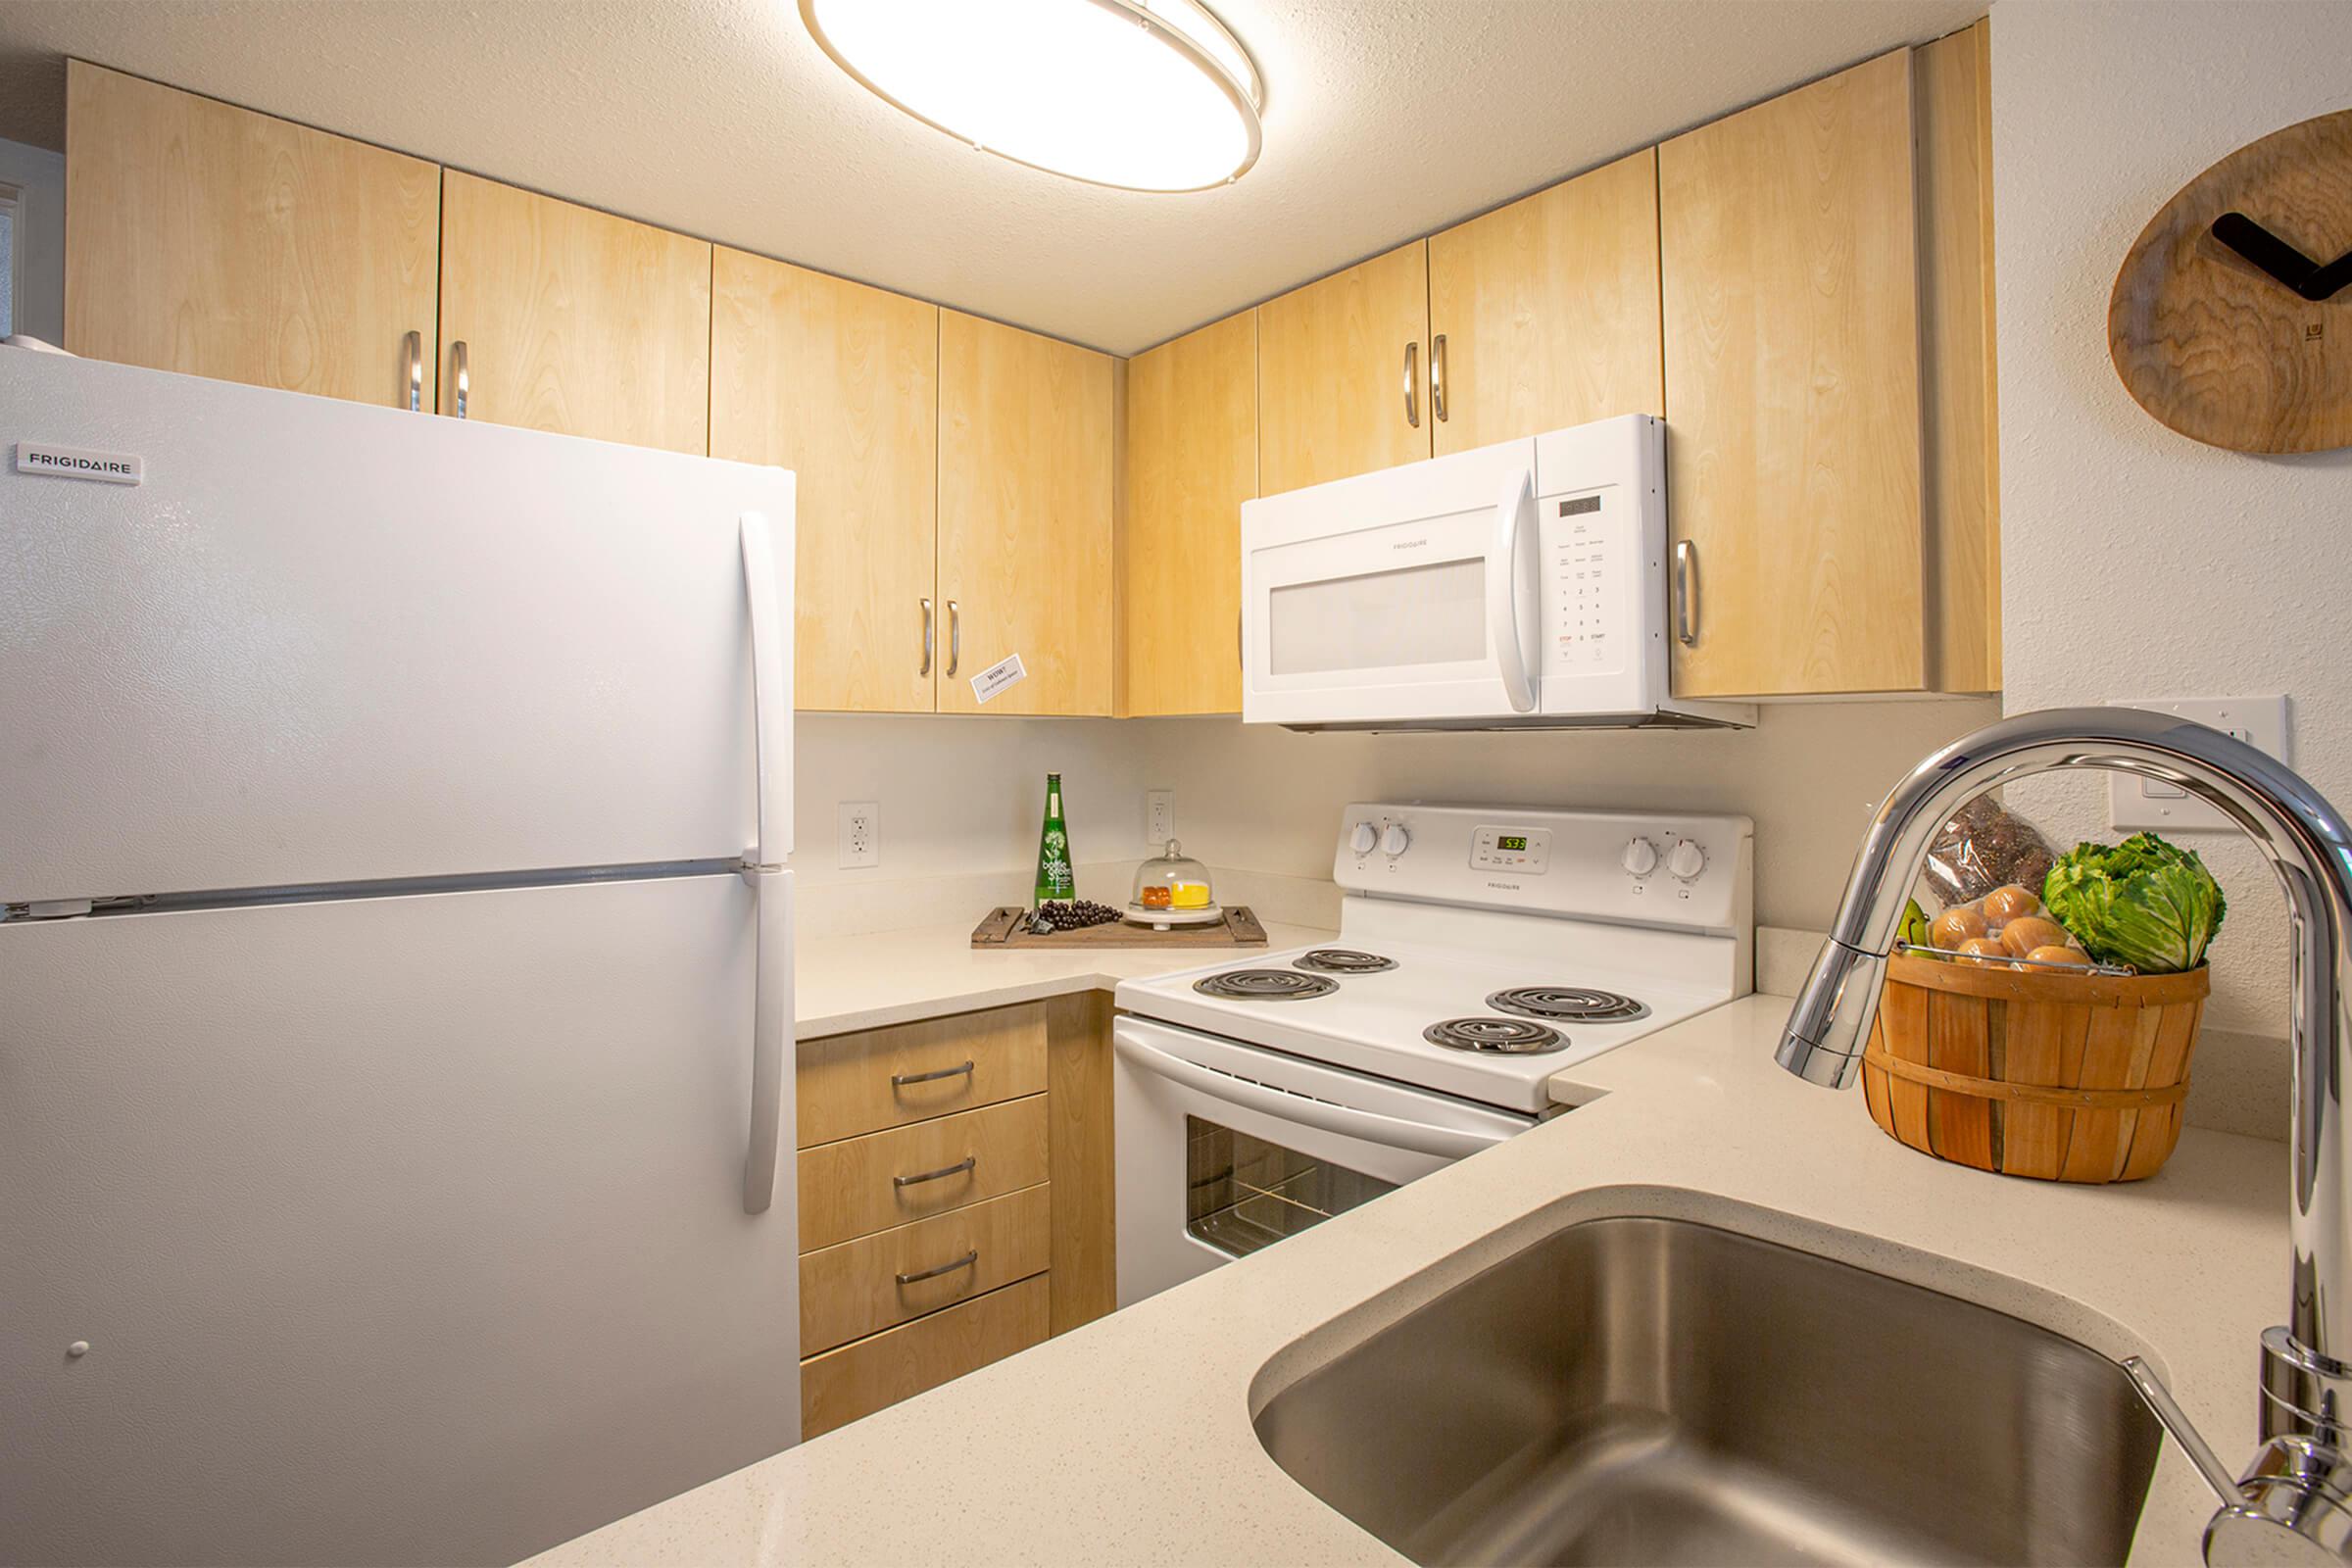 Phoenix, AZ kitchen with large quartz countertops, light wood cabinets, and white appliances